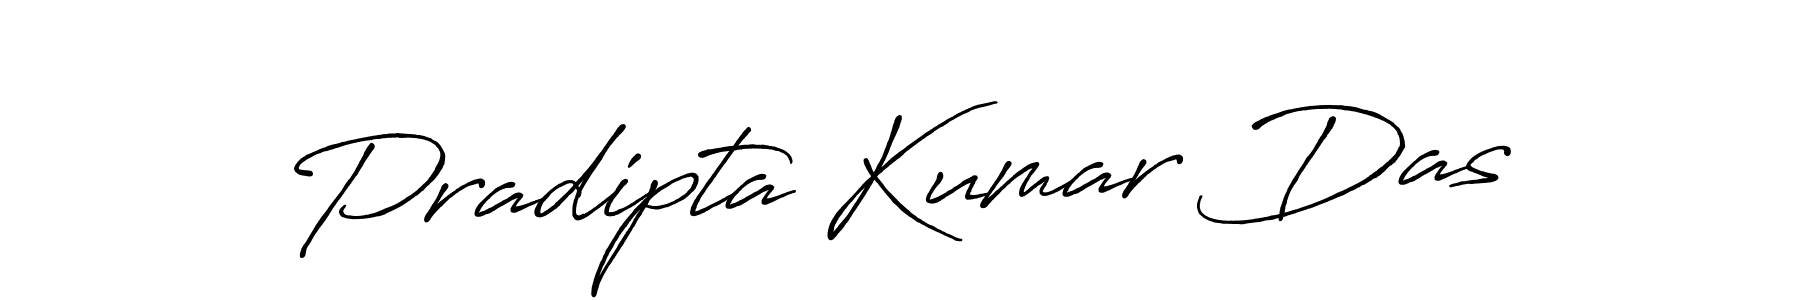 How to Draw Pradipta Kumar Das signature style? Antro_Vectra_Bolder is a latest design signature styles for name Pradipta Kumar Das. Pradipta Kumar Das signature style 7 images and pictures png